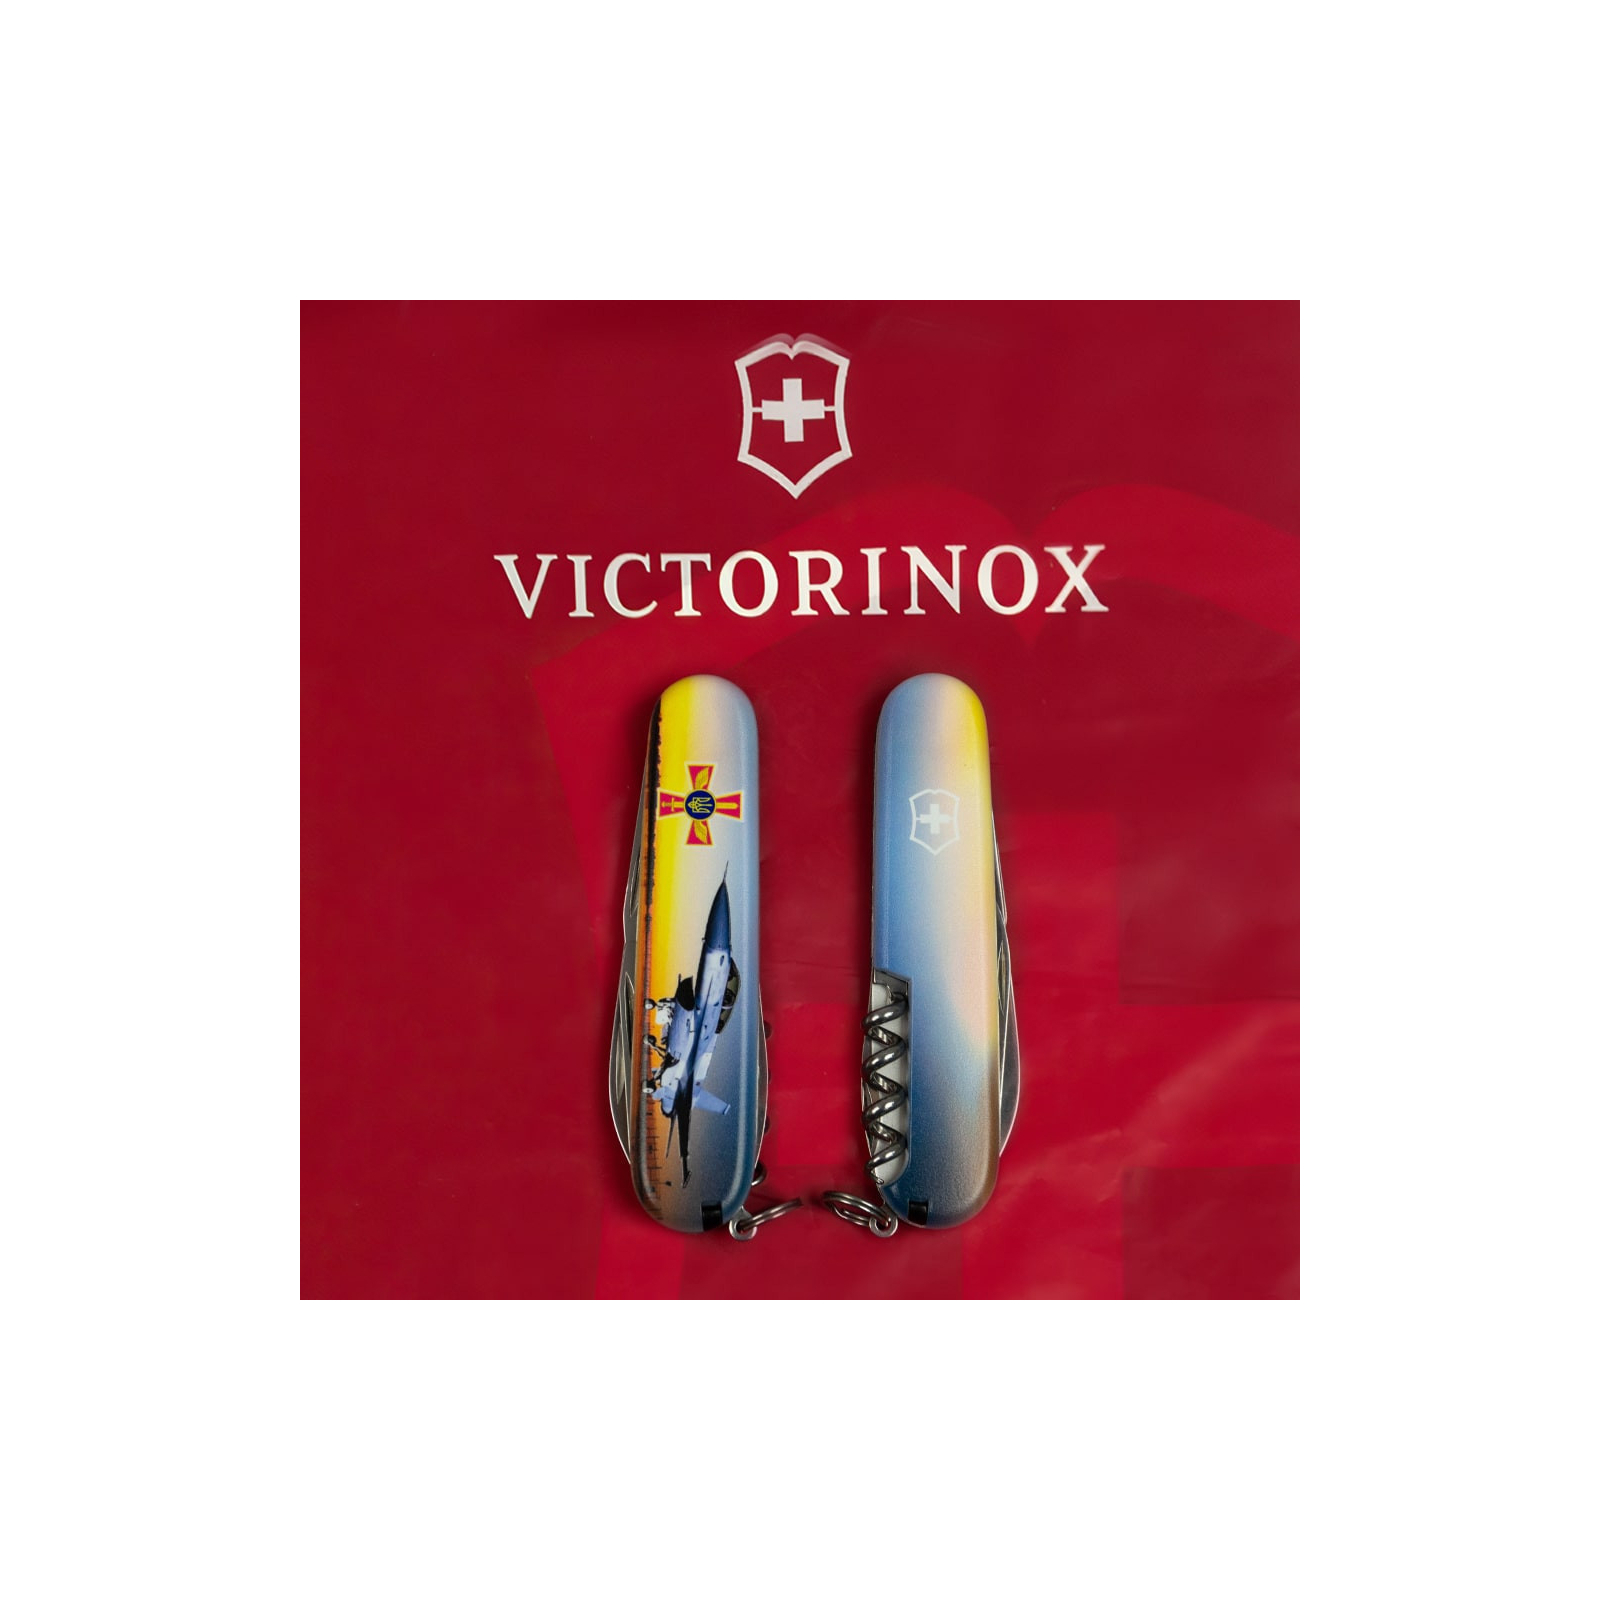 Нож Victorinox Spartan Army 91 мм Літак + Емблема ПС ЗСУ (1.3603.3_W3040p) изображение 11